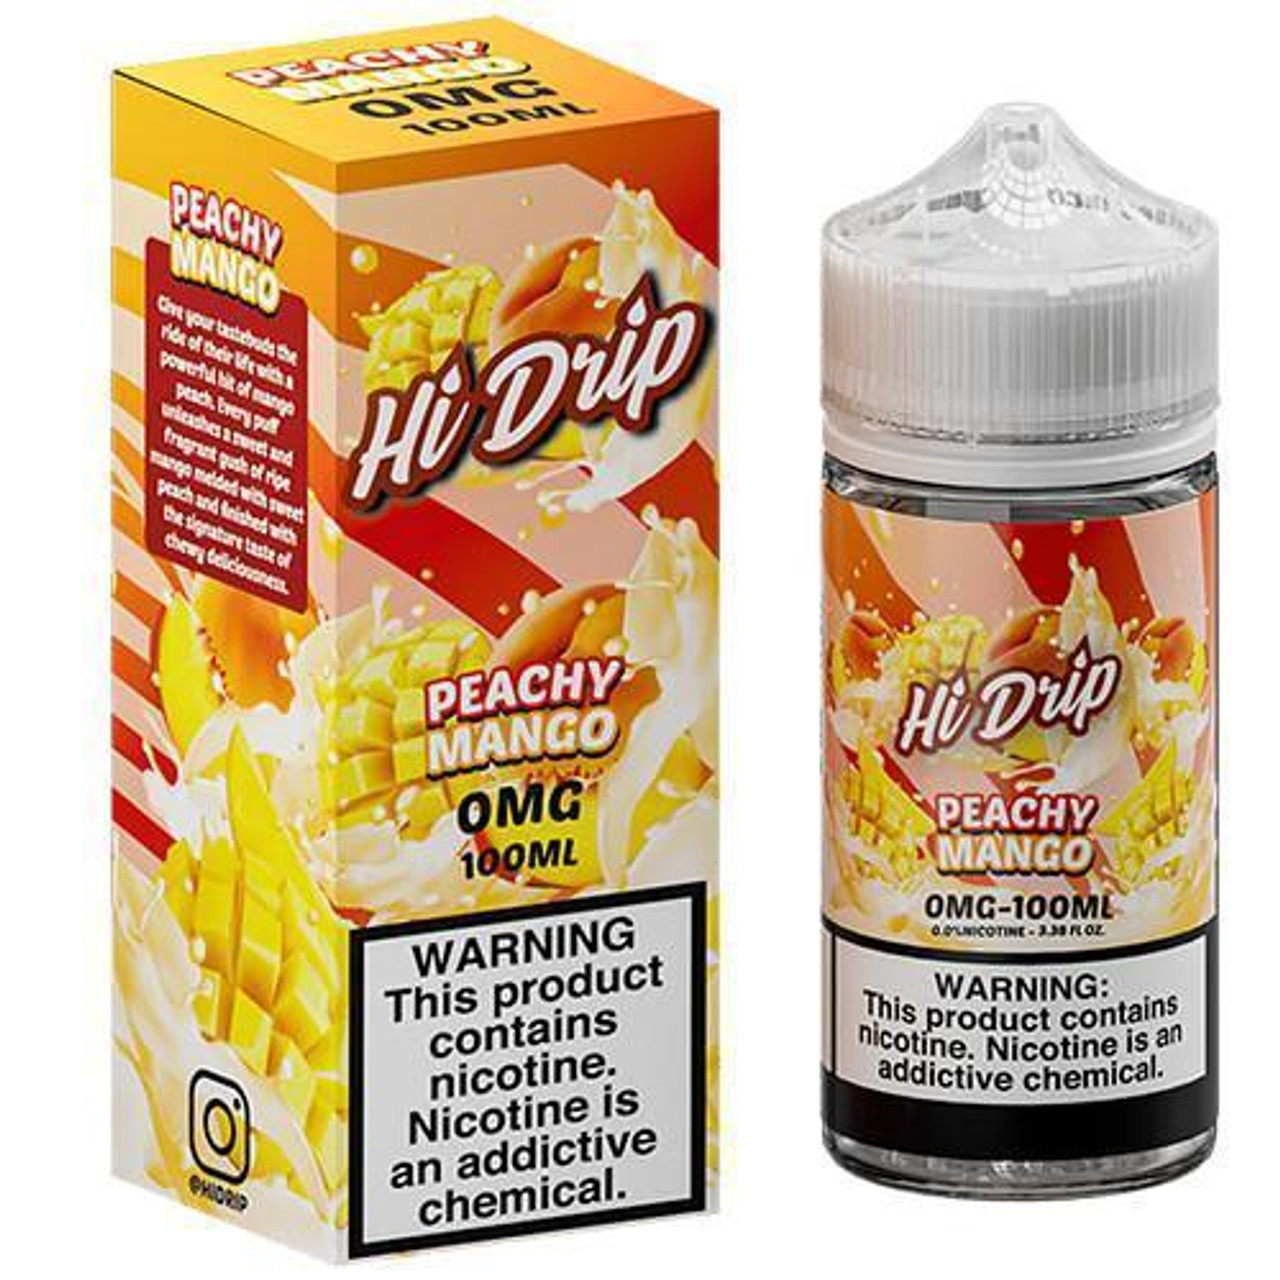 Hi Drip - Peachy Mango 100ml | Premium E-Liquid - Eciggity